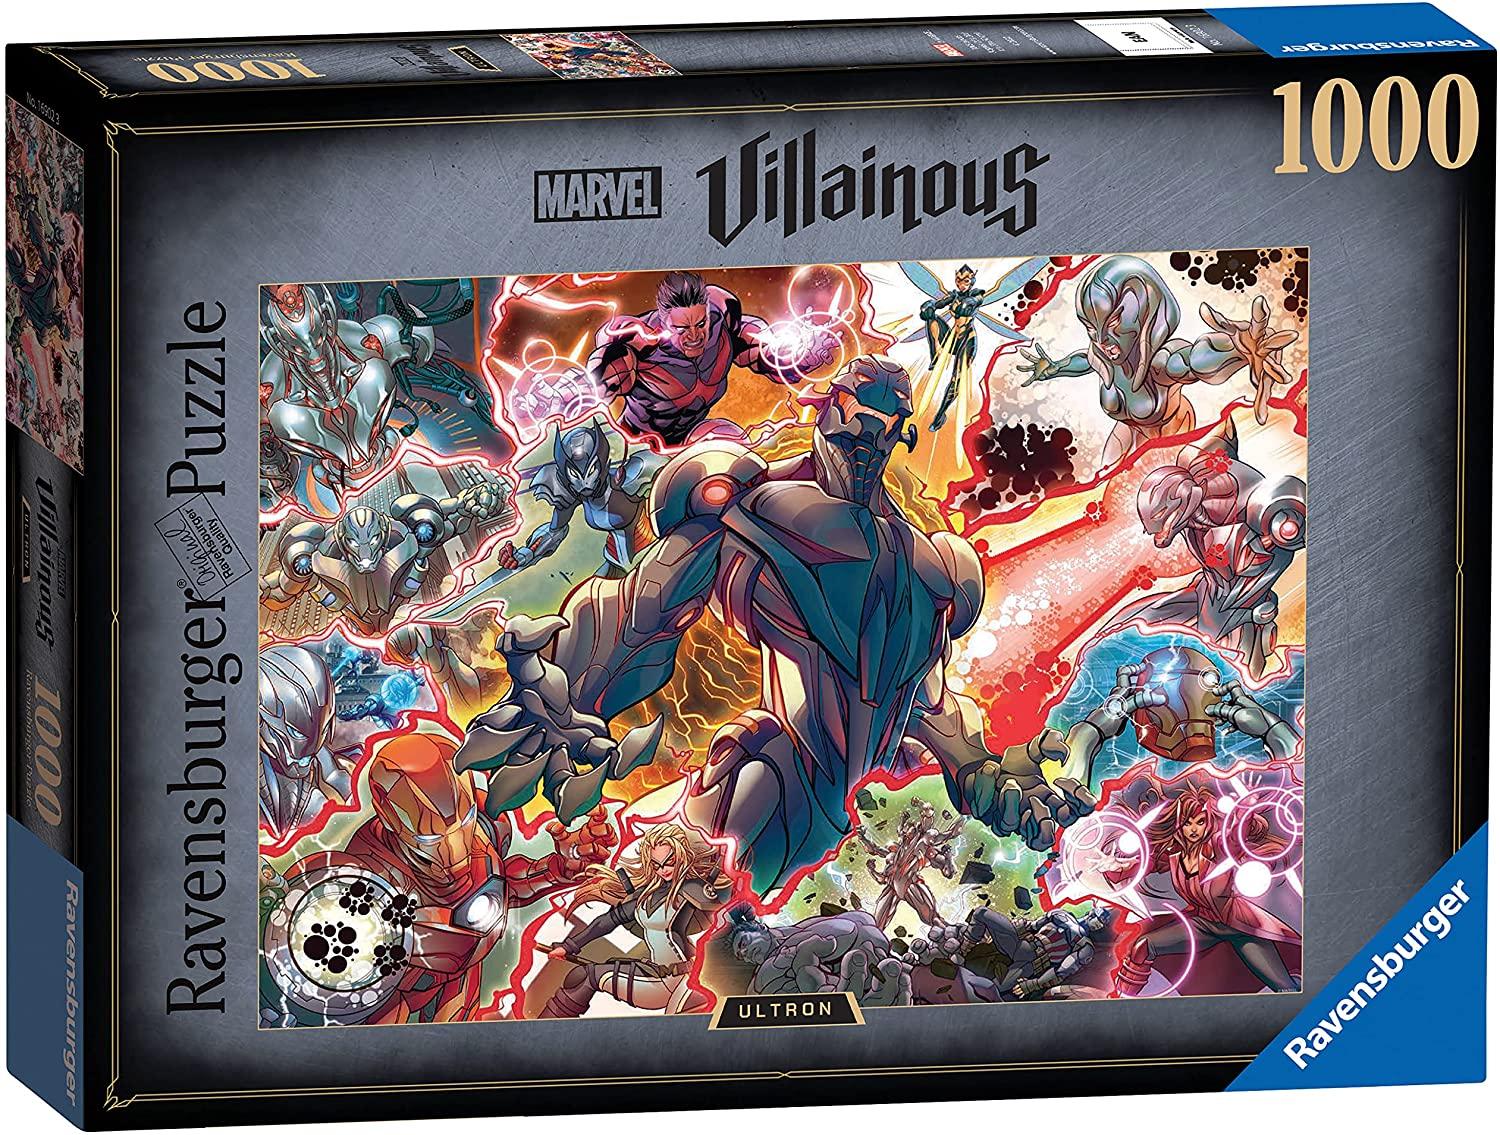 Ravensburger Marvel Villainous Ultron 1000 Piece Jigsaw Puzzles